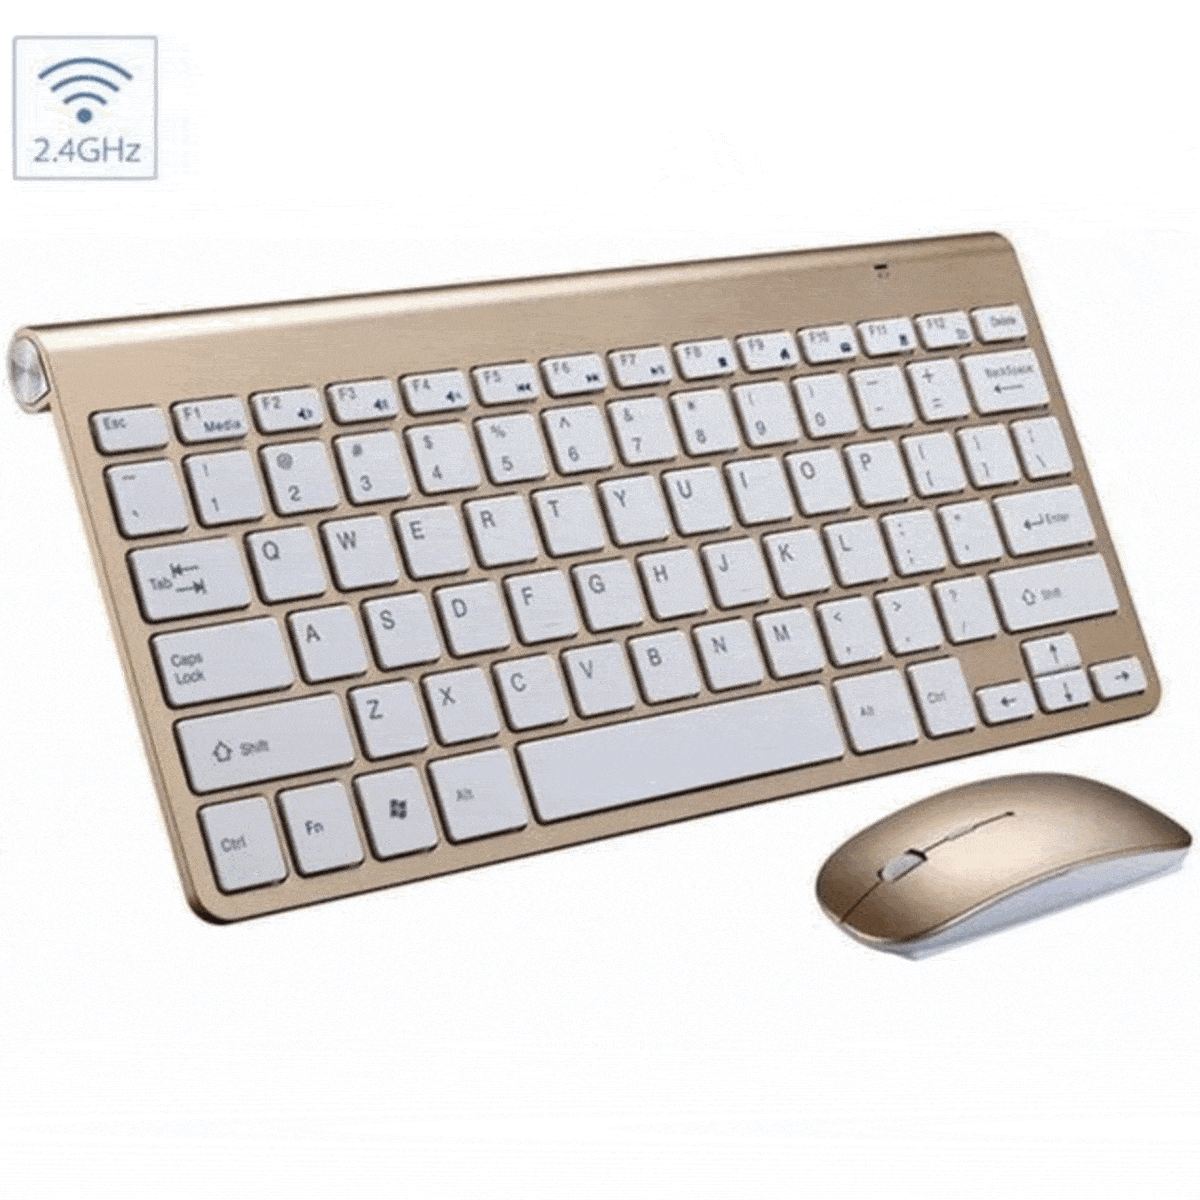 Thin Mini Wireless Keyboard and Optical Mouse Combo Set